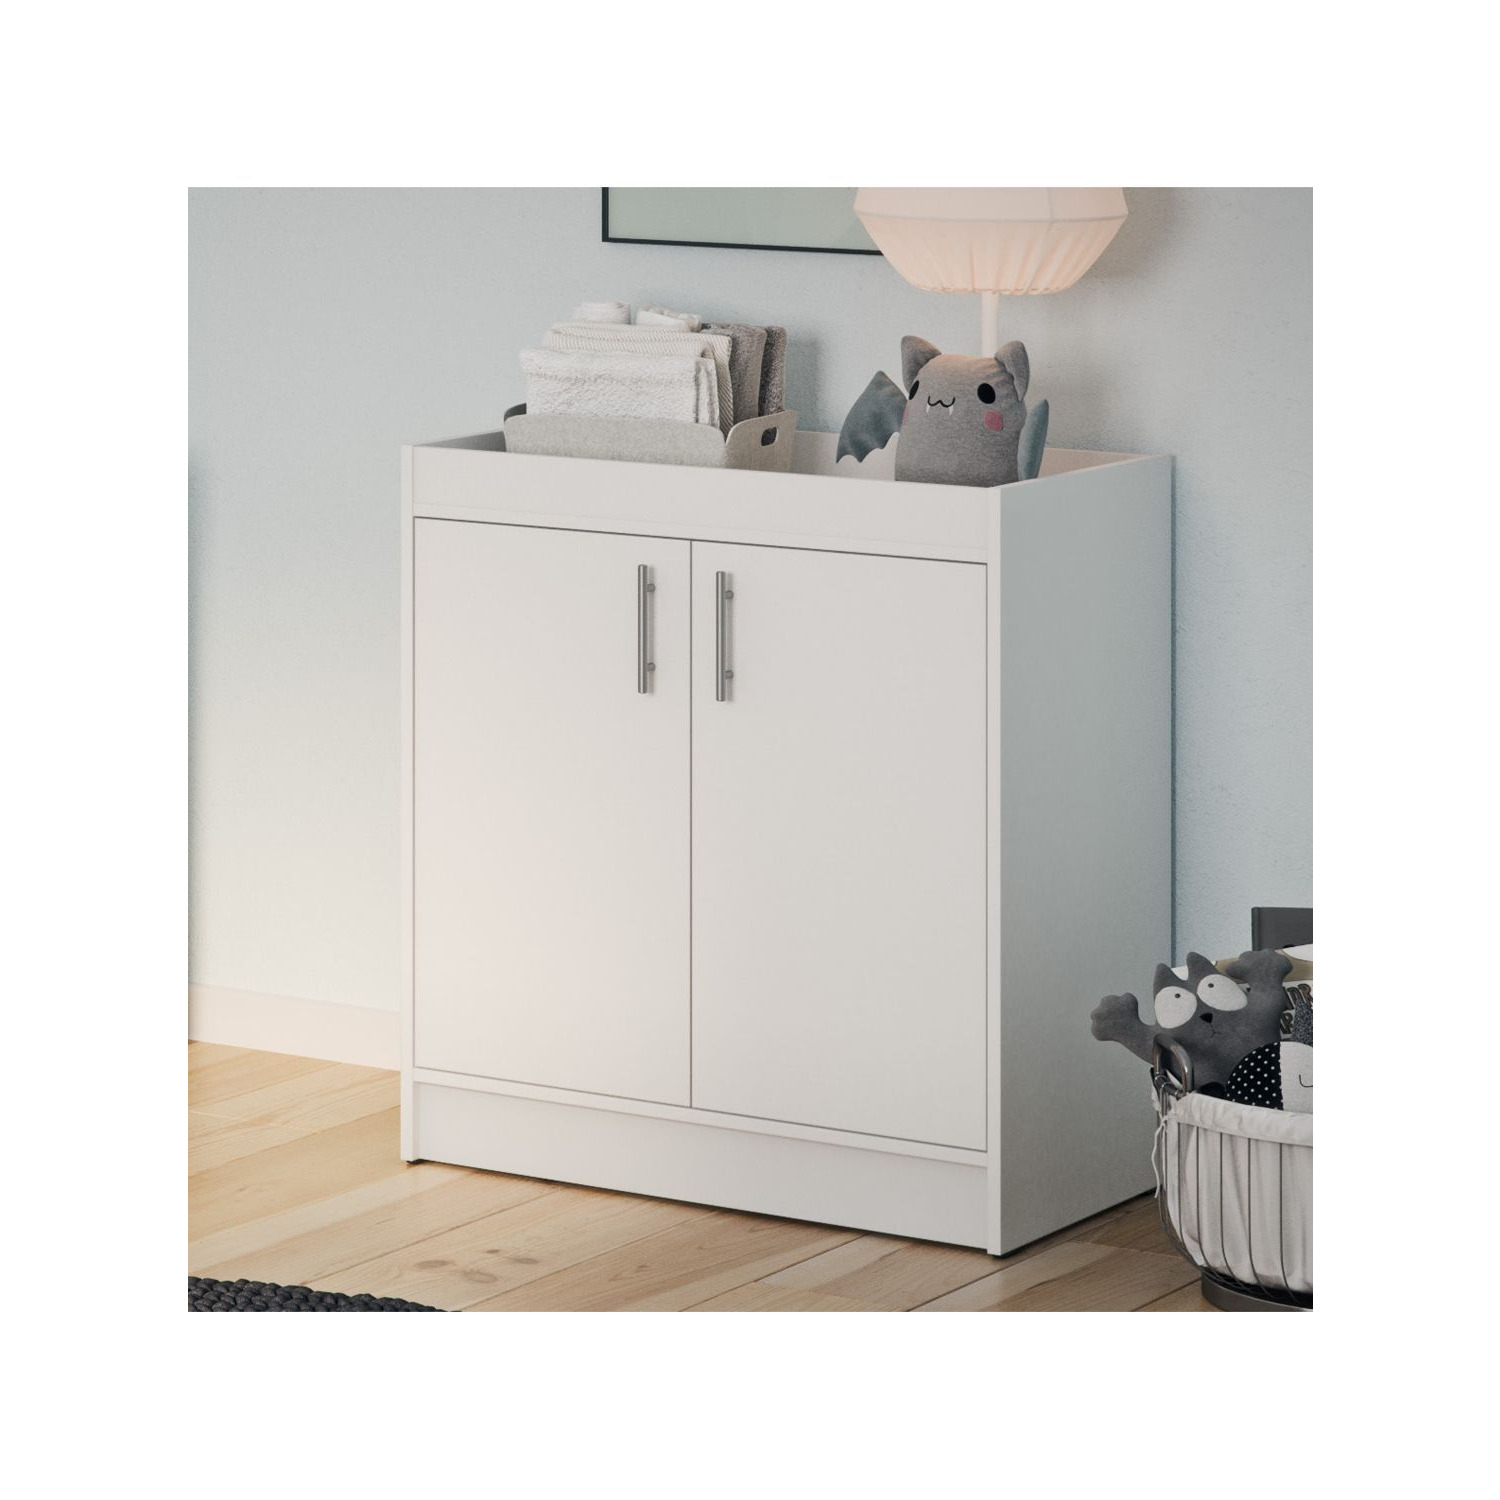 Little Acorns Athena Dresser, White - image 1